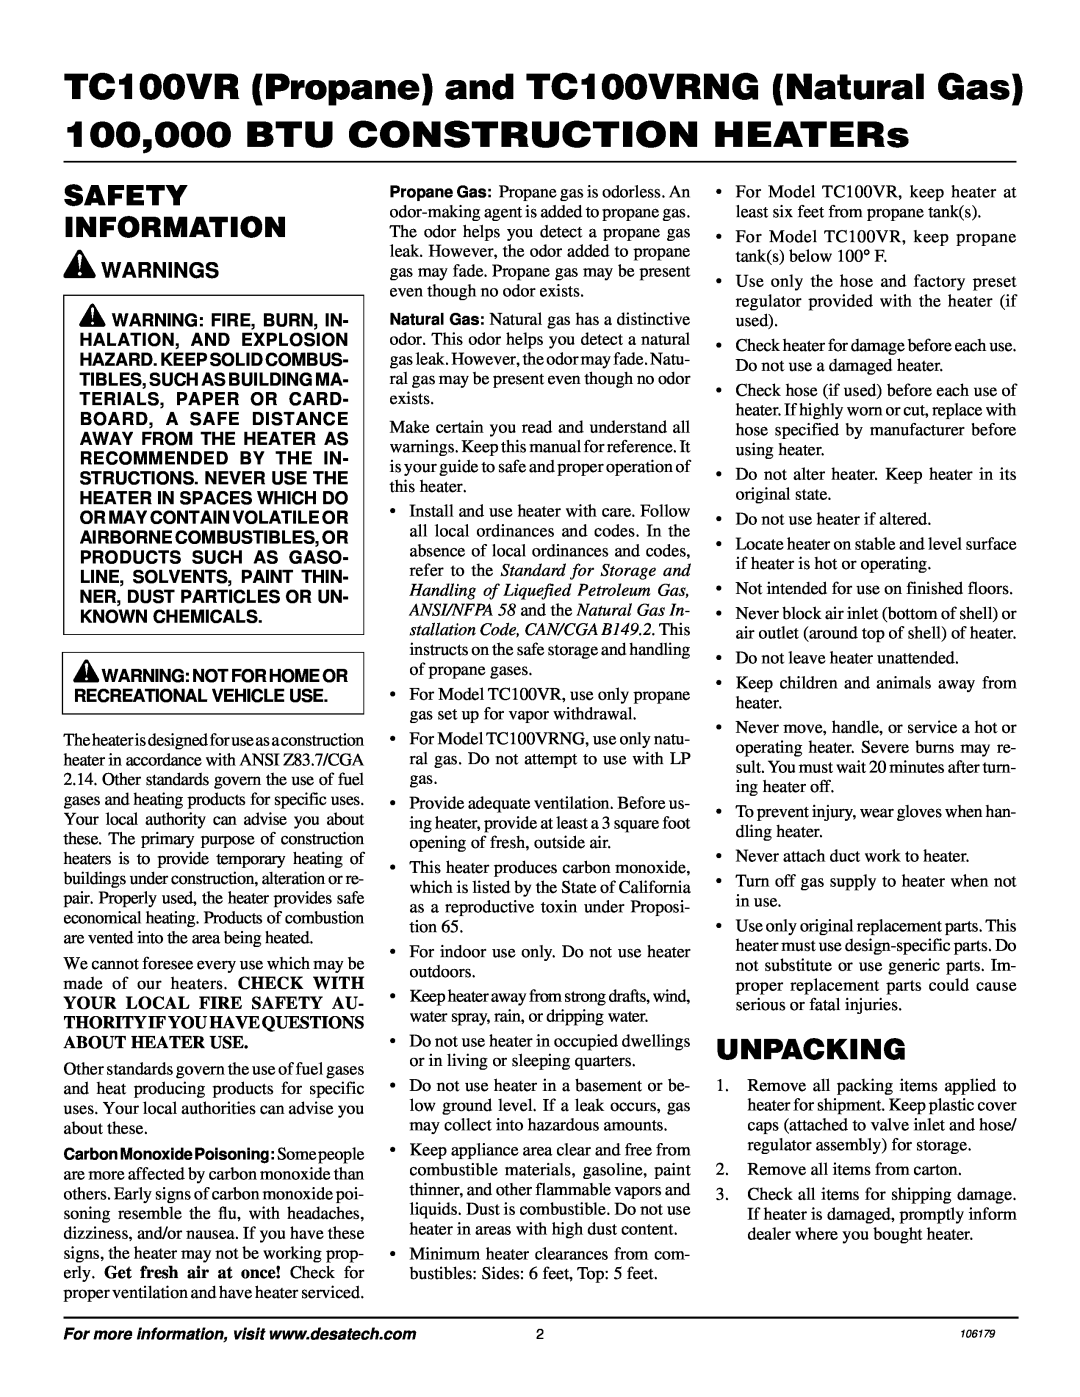 Desa TC100VRNG owner manual Safety Information, Unpacking, Warnings 